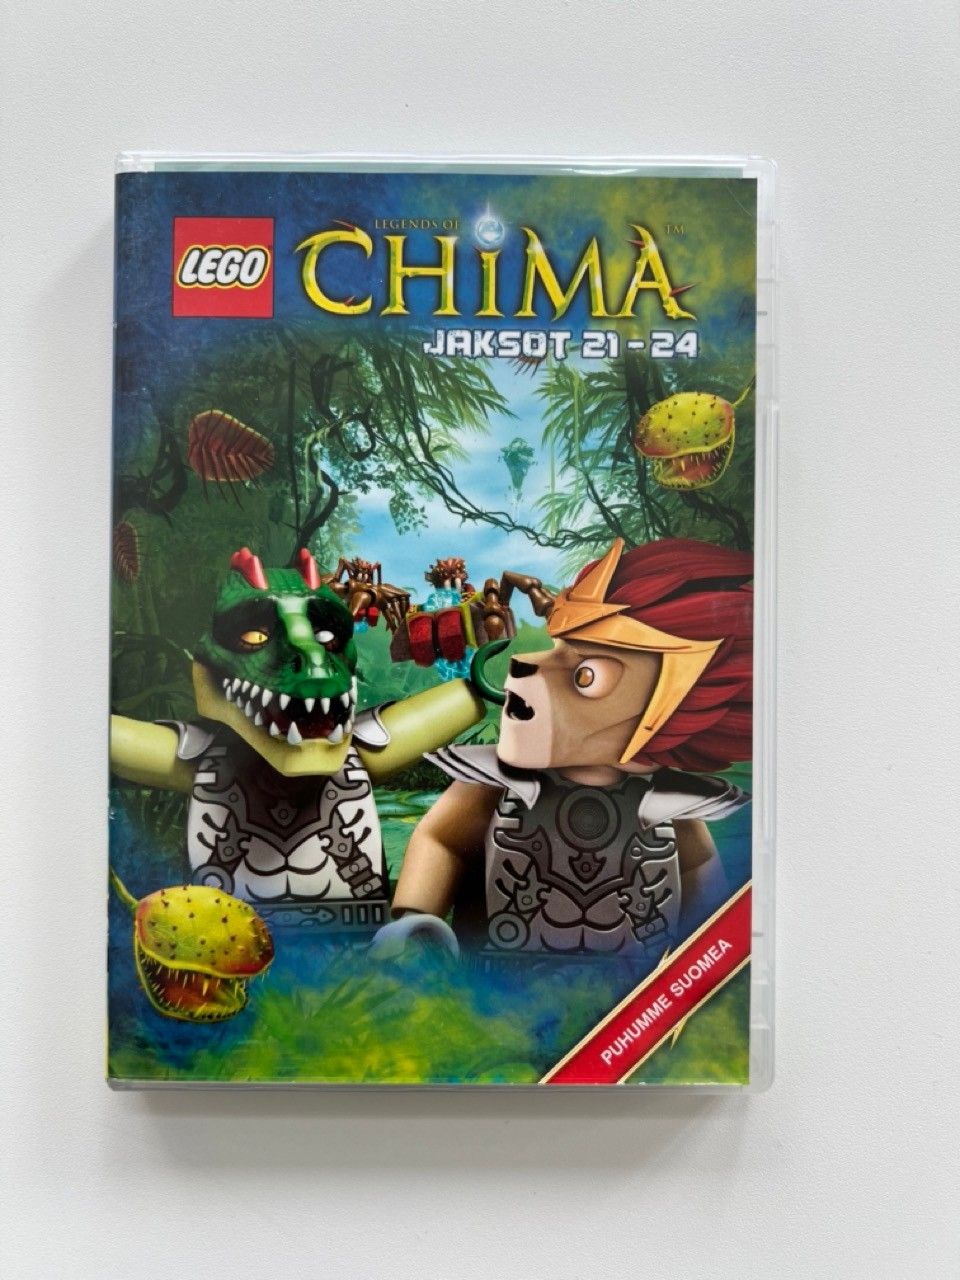 DVD lapset: Lego Chima, jaksot 21-24